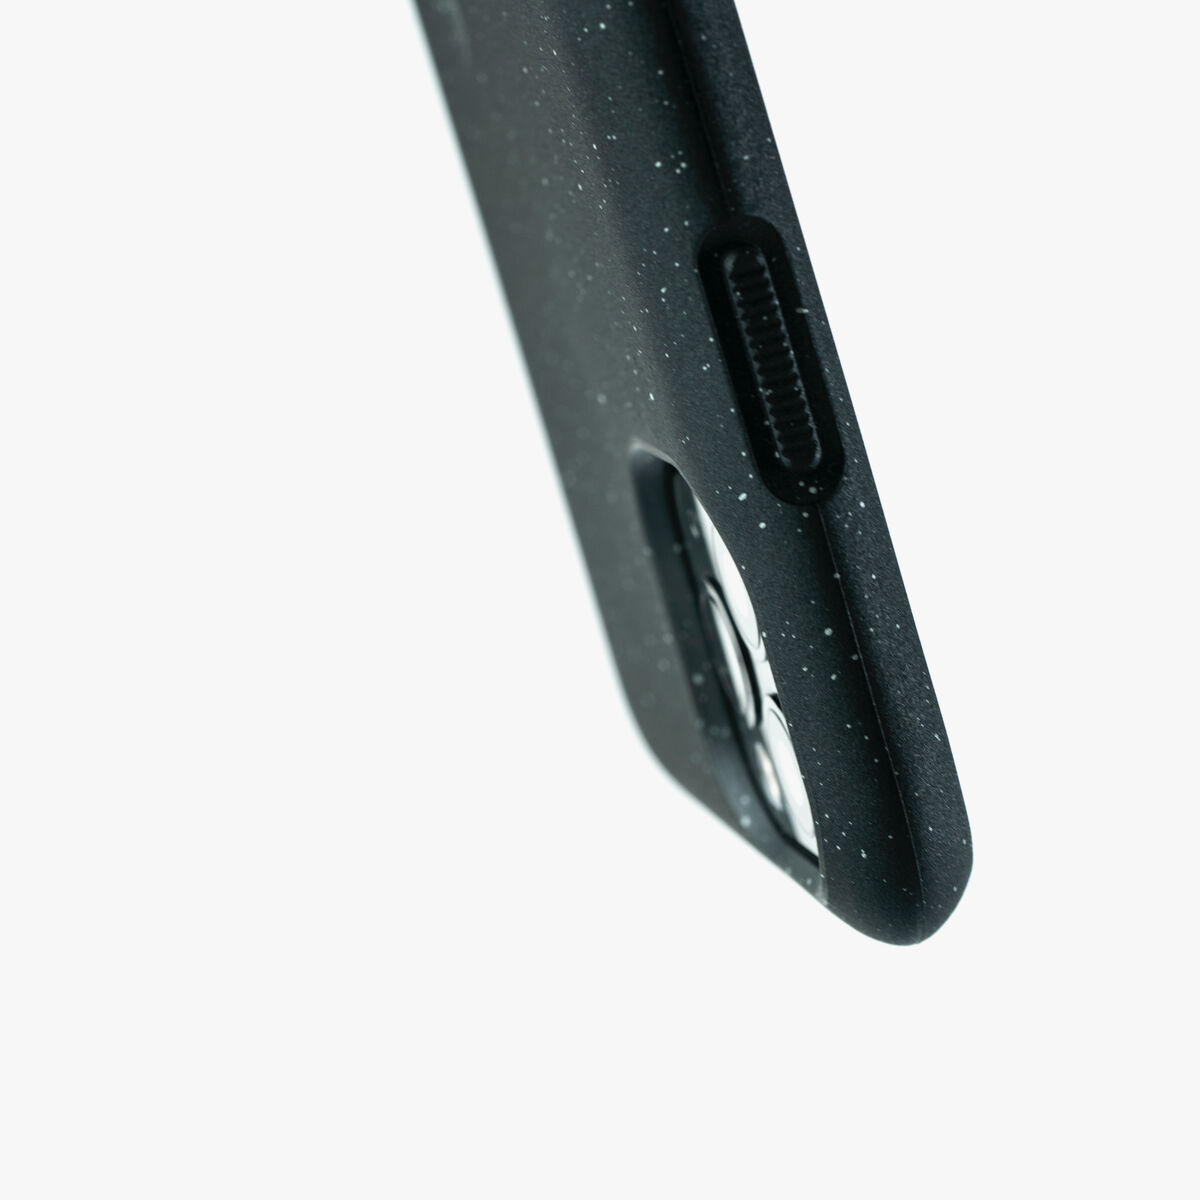 Torrey Case (Black) for Apple iPhone 11 Pro,, large